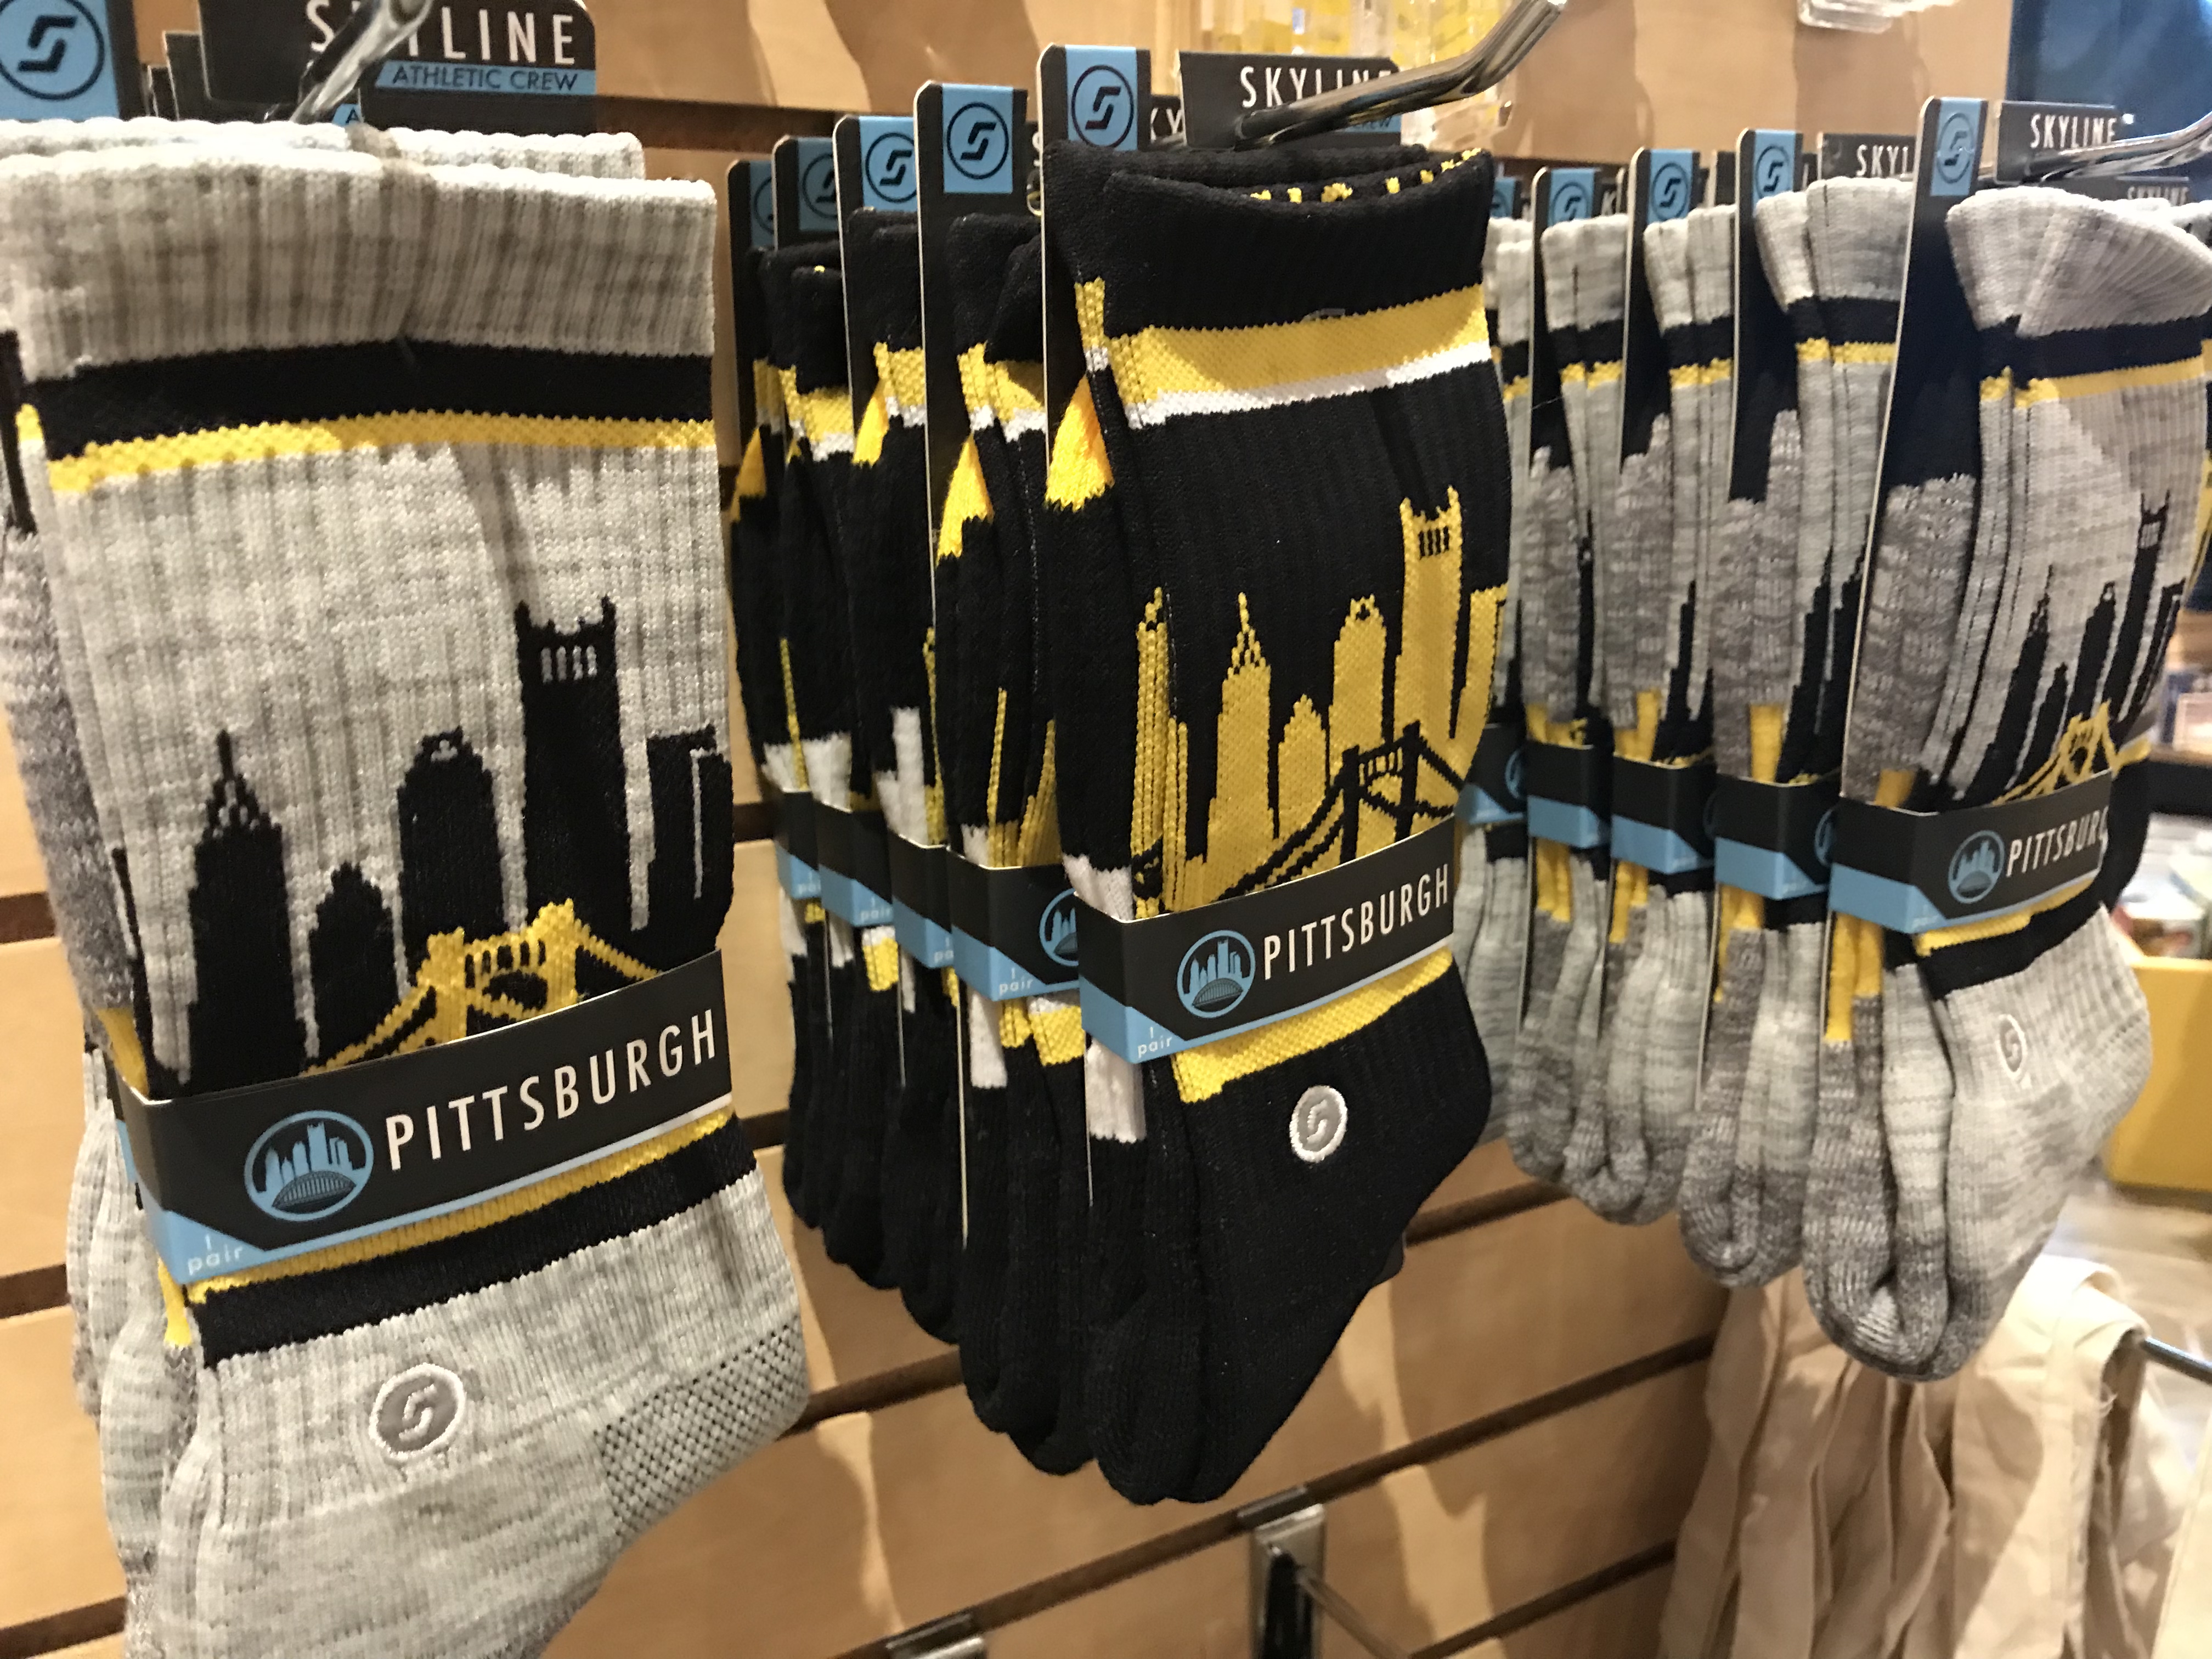 Pittsburgh Skyline Socks | History Center Museum Shop